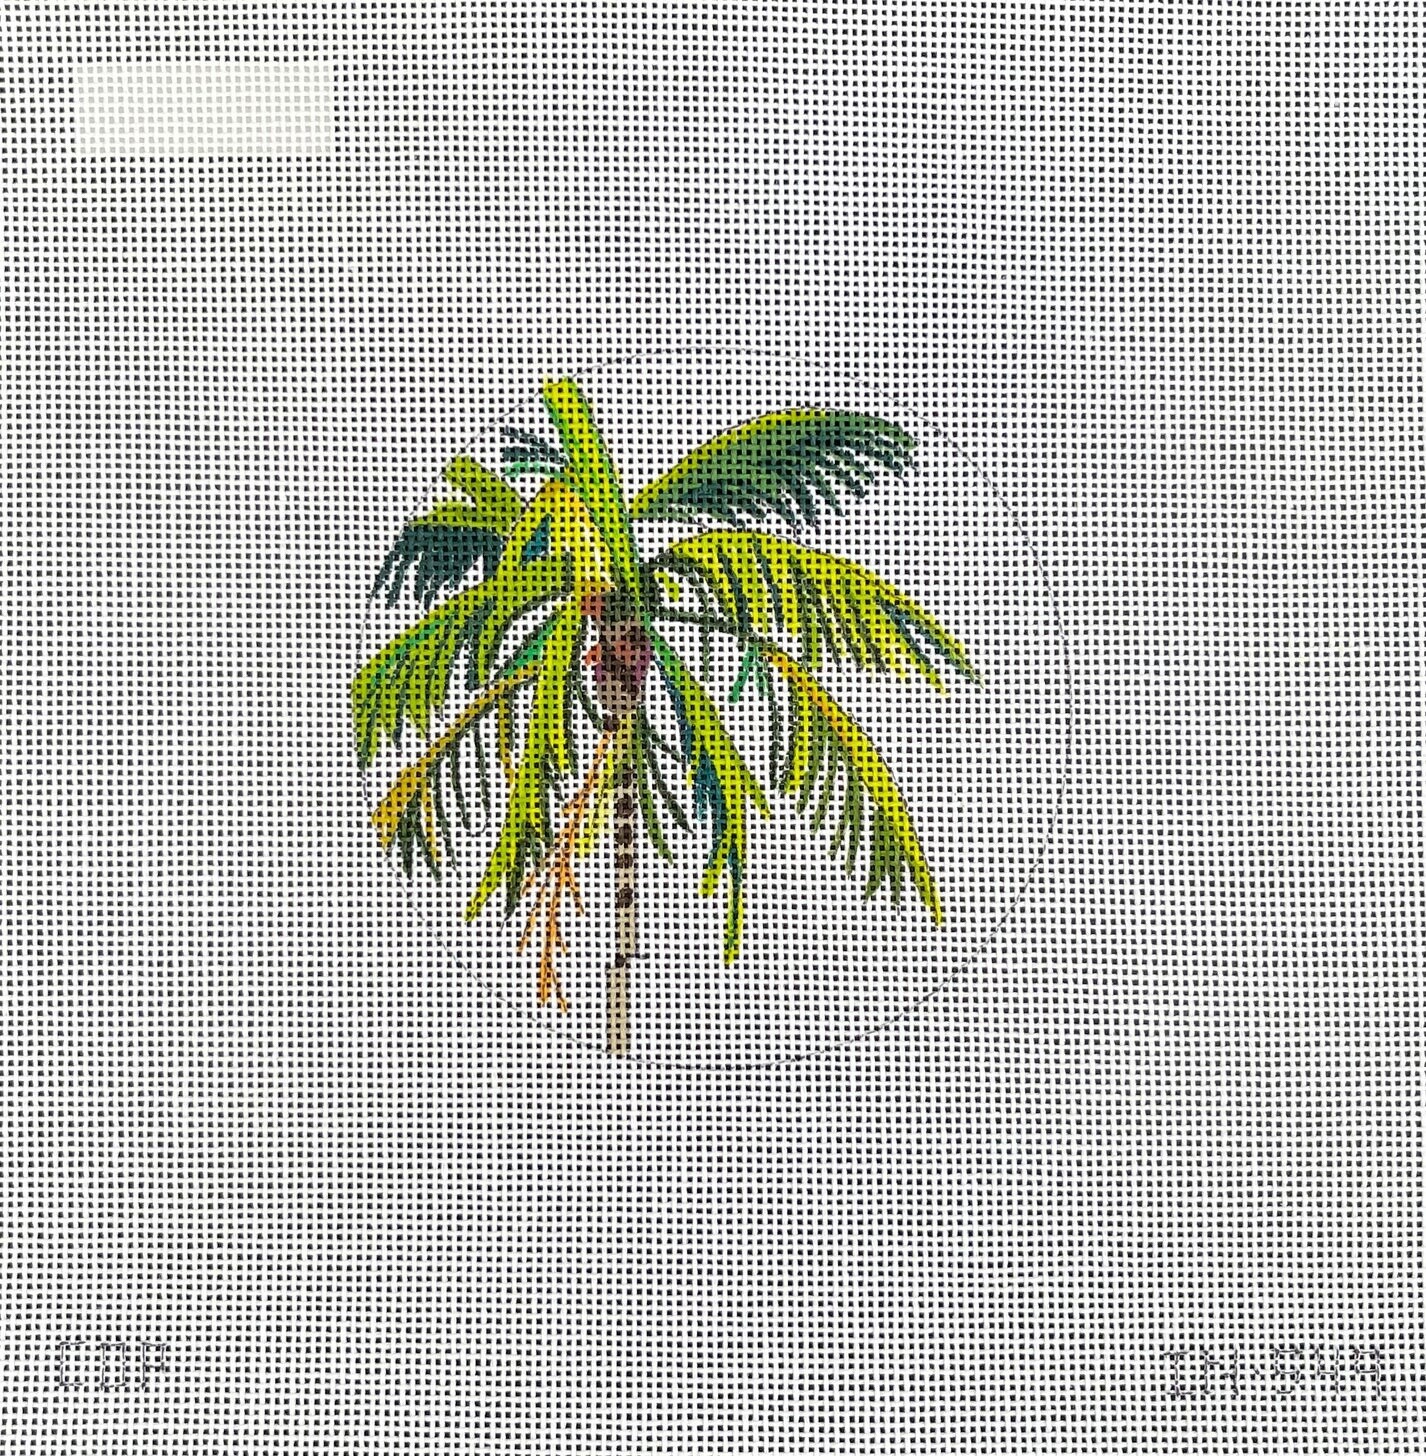 Palm Tree - Insert